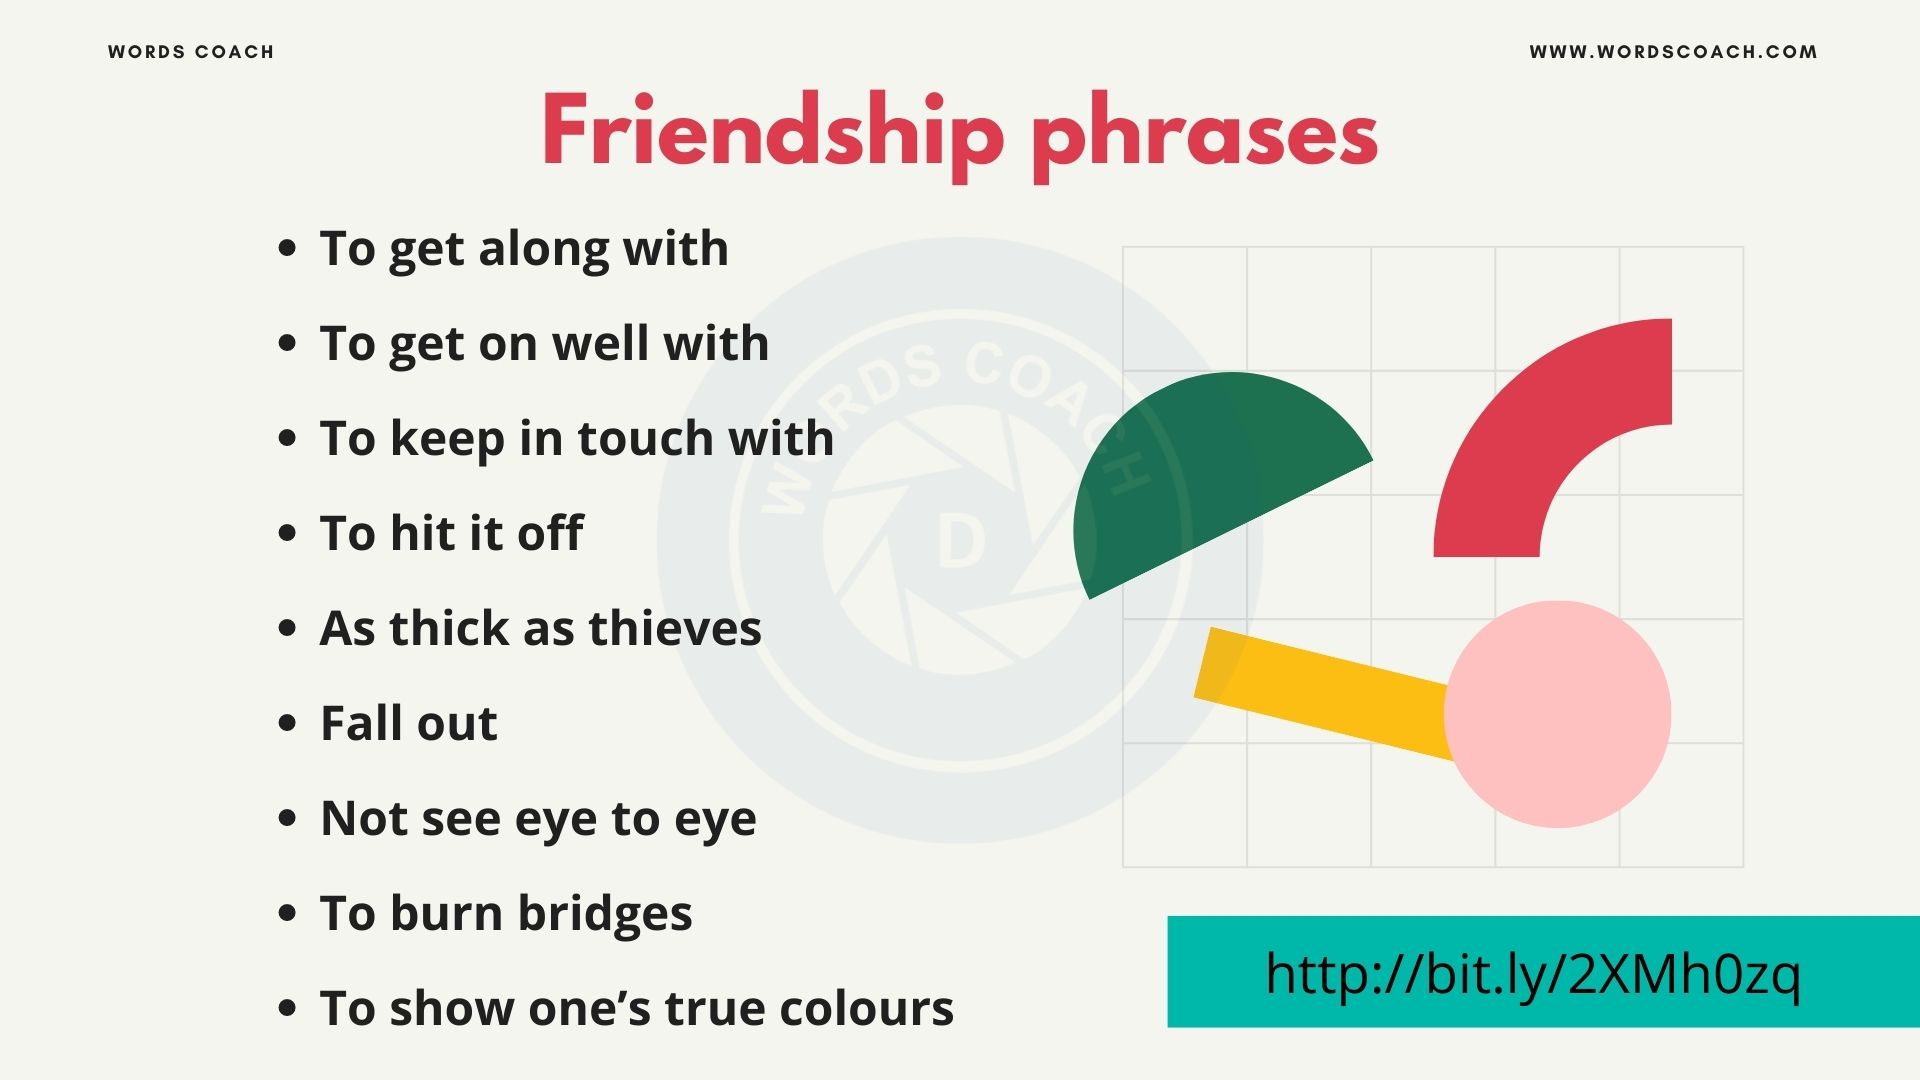 Friendship phrases - wordscoach.com